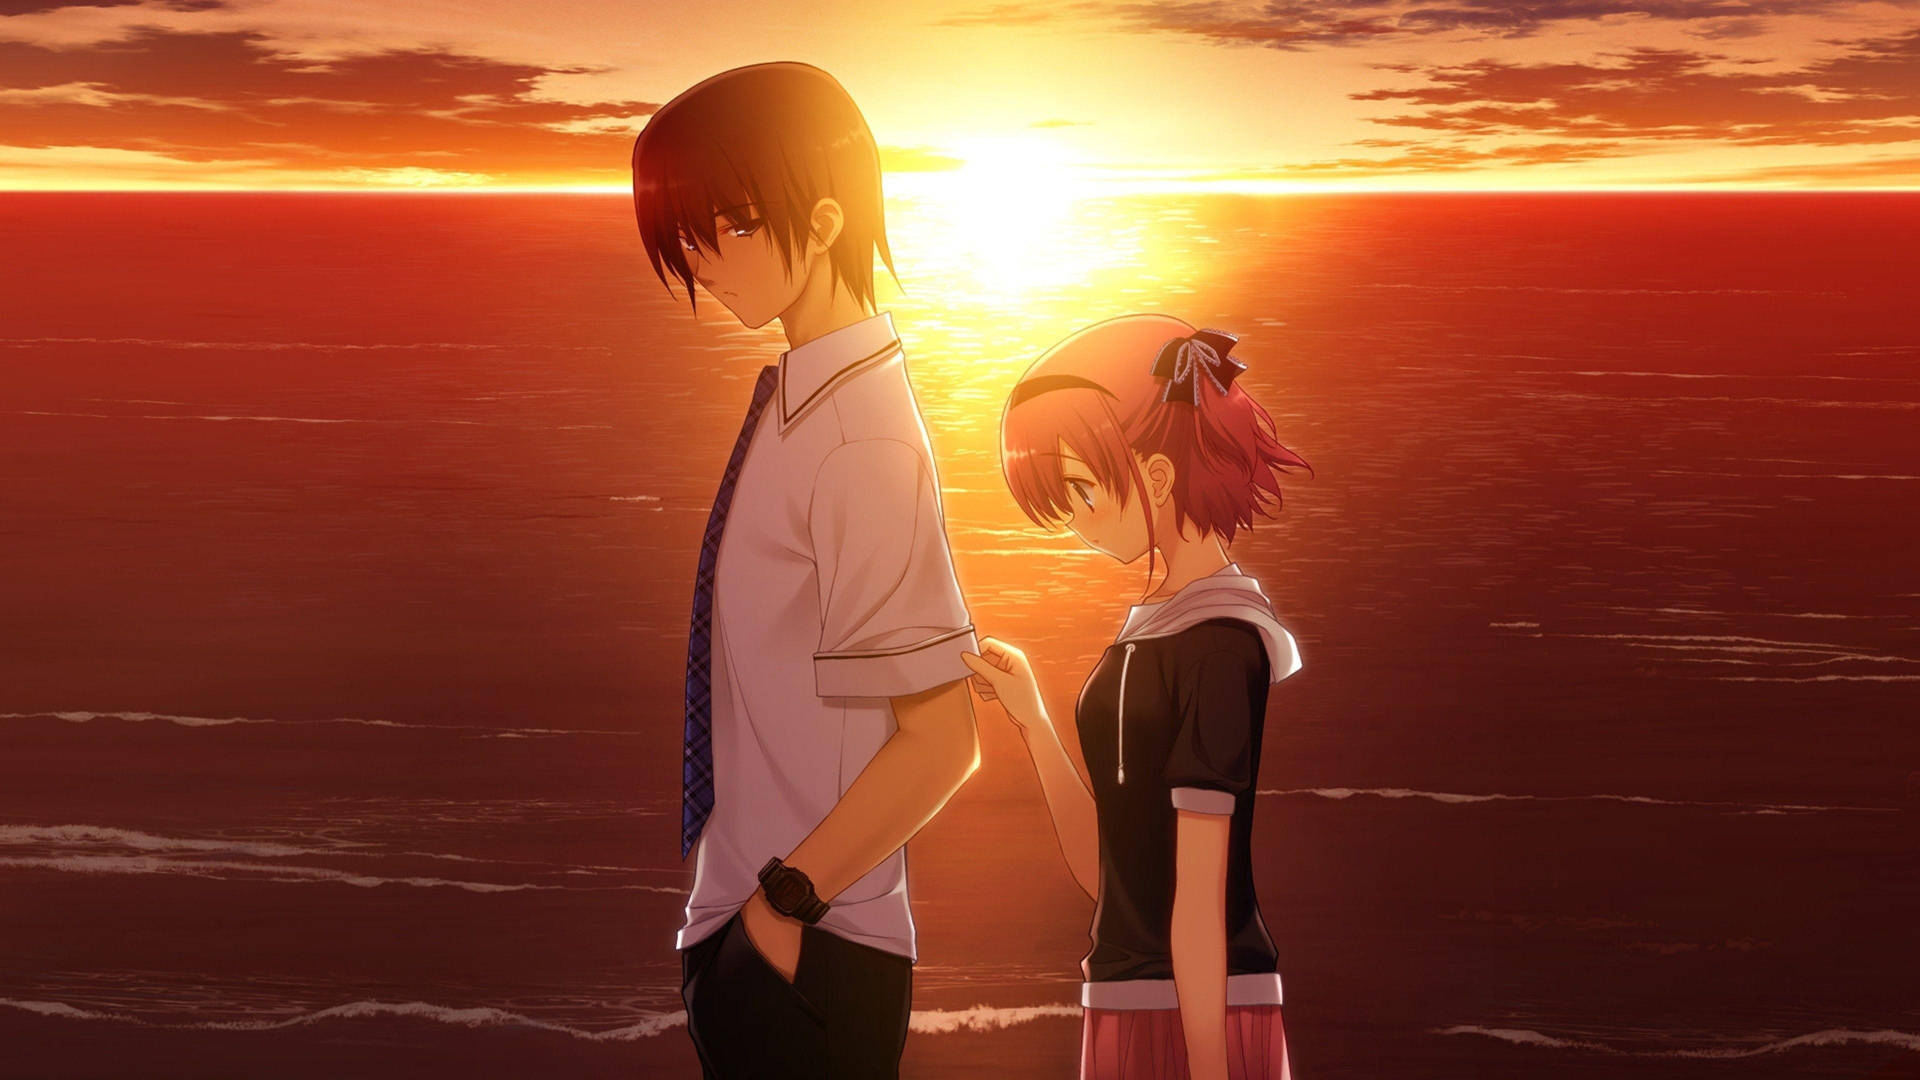 Sad Anime Boy In Sunset Background